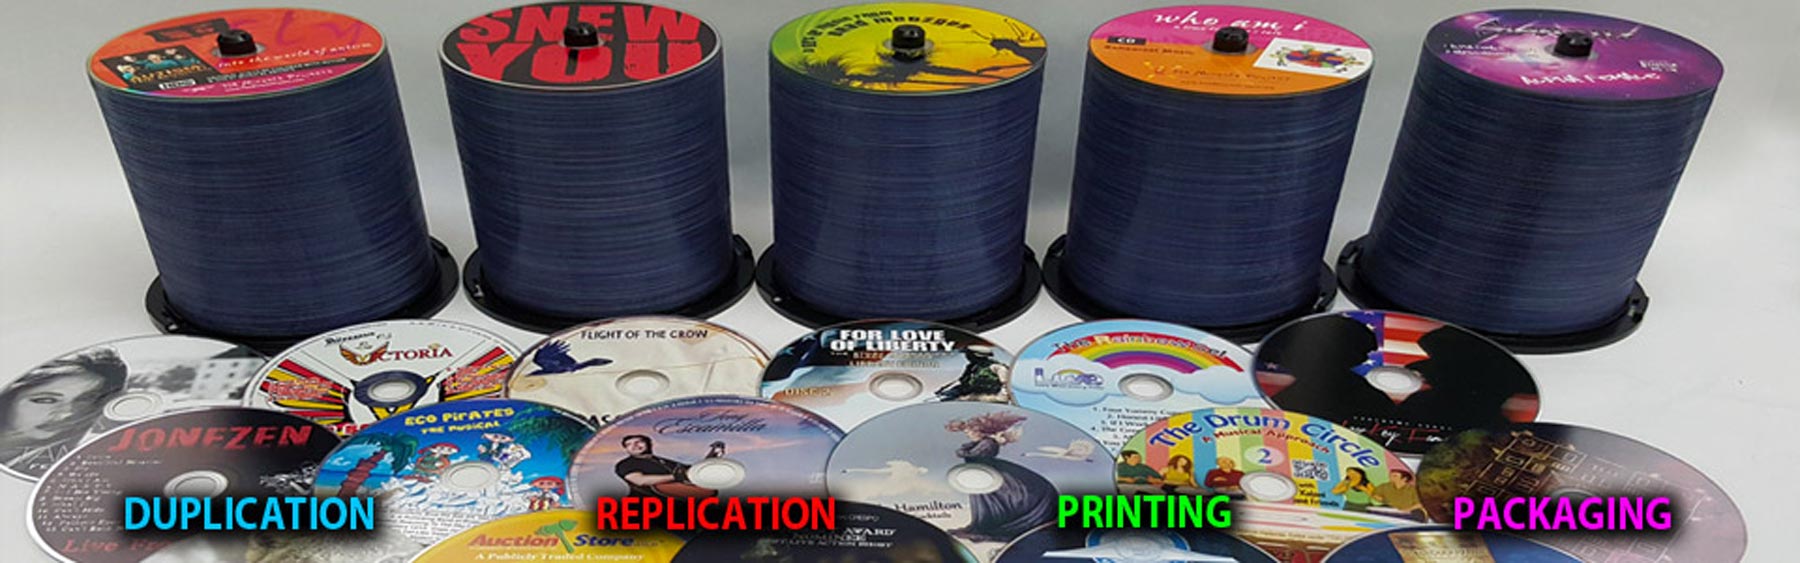 CD duplication